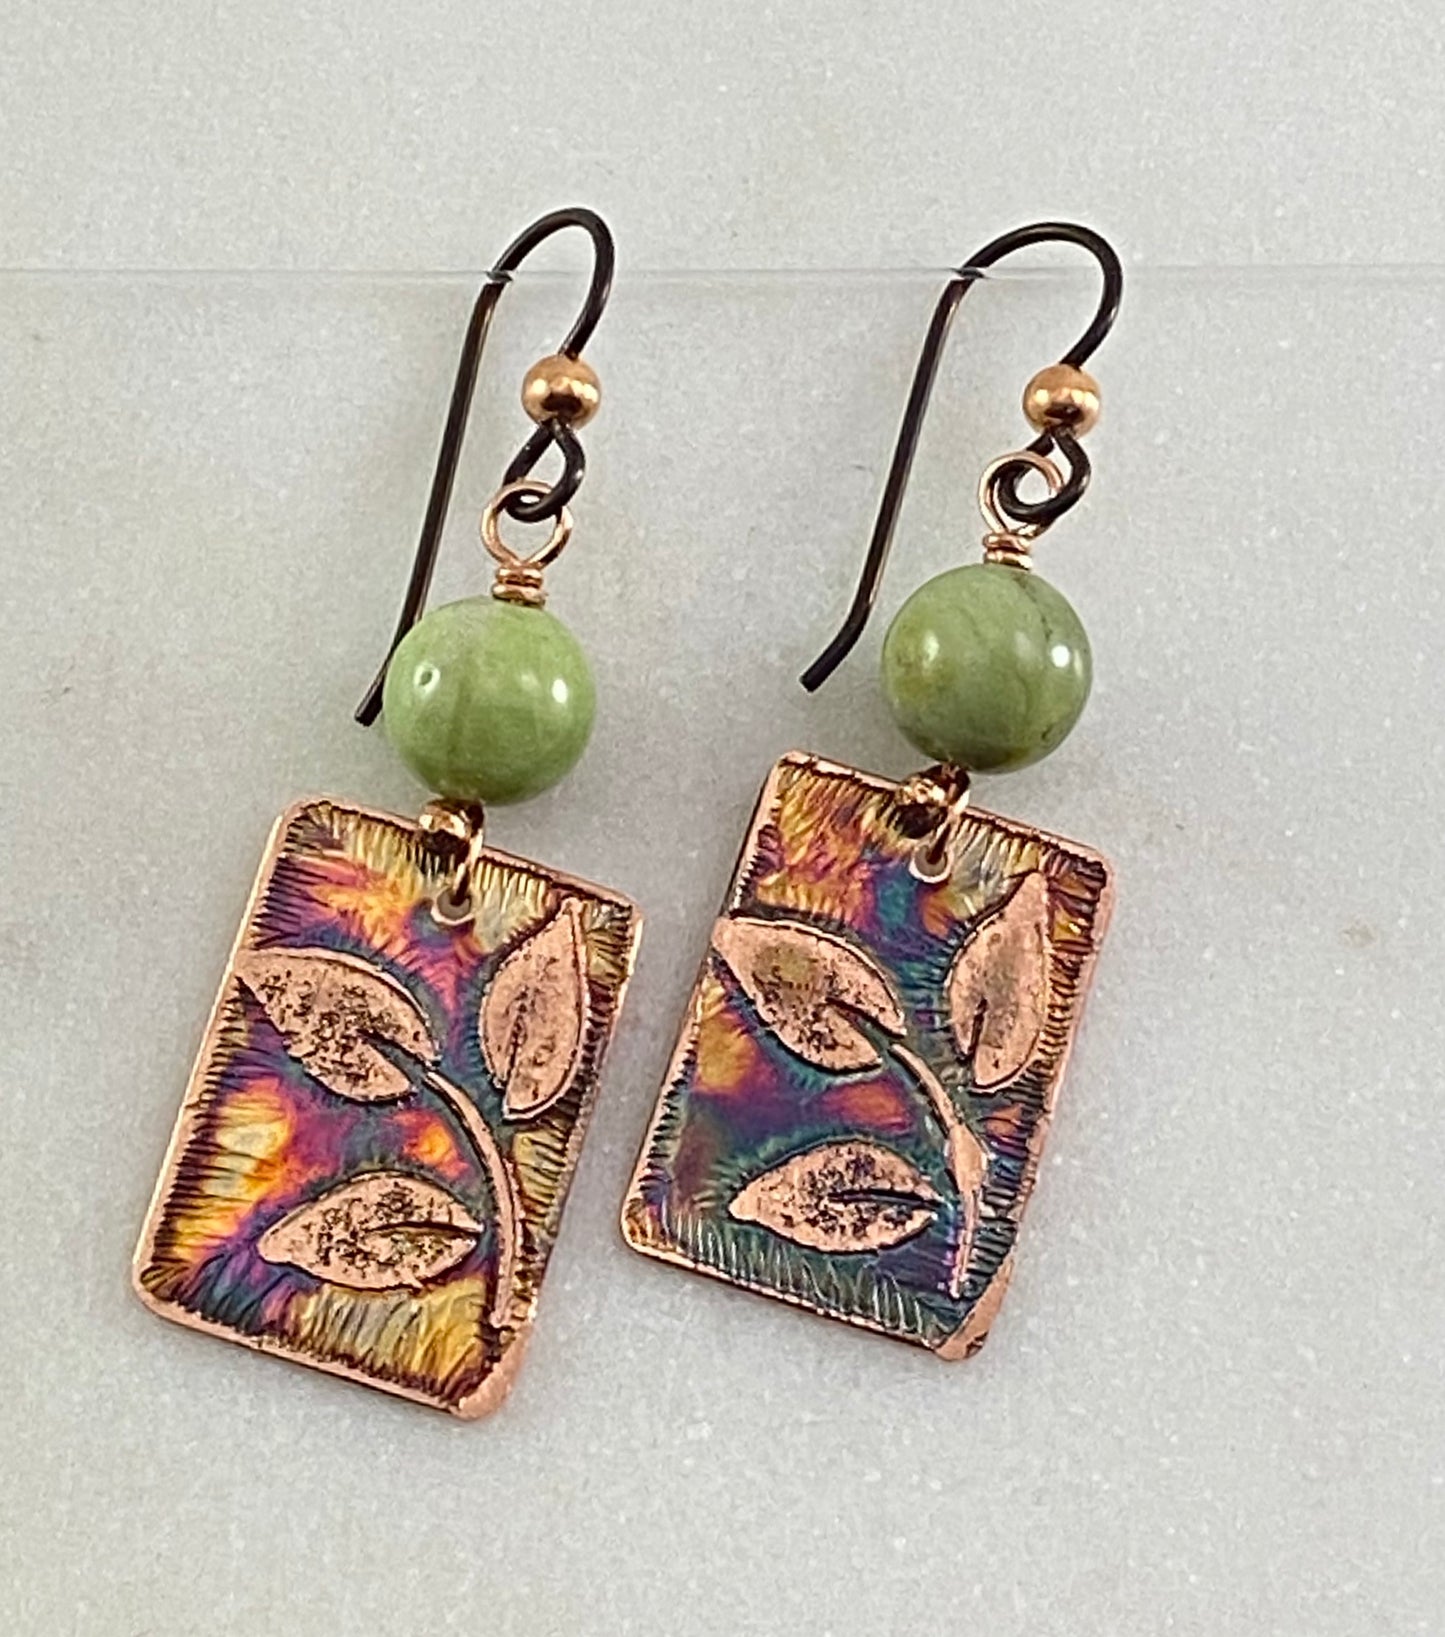 Acid etched copper earrings with green garnet gemstones